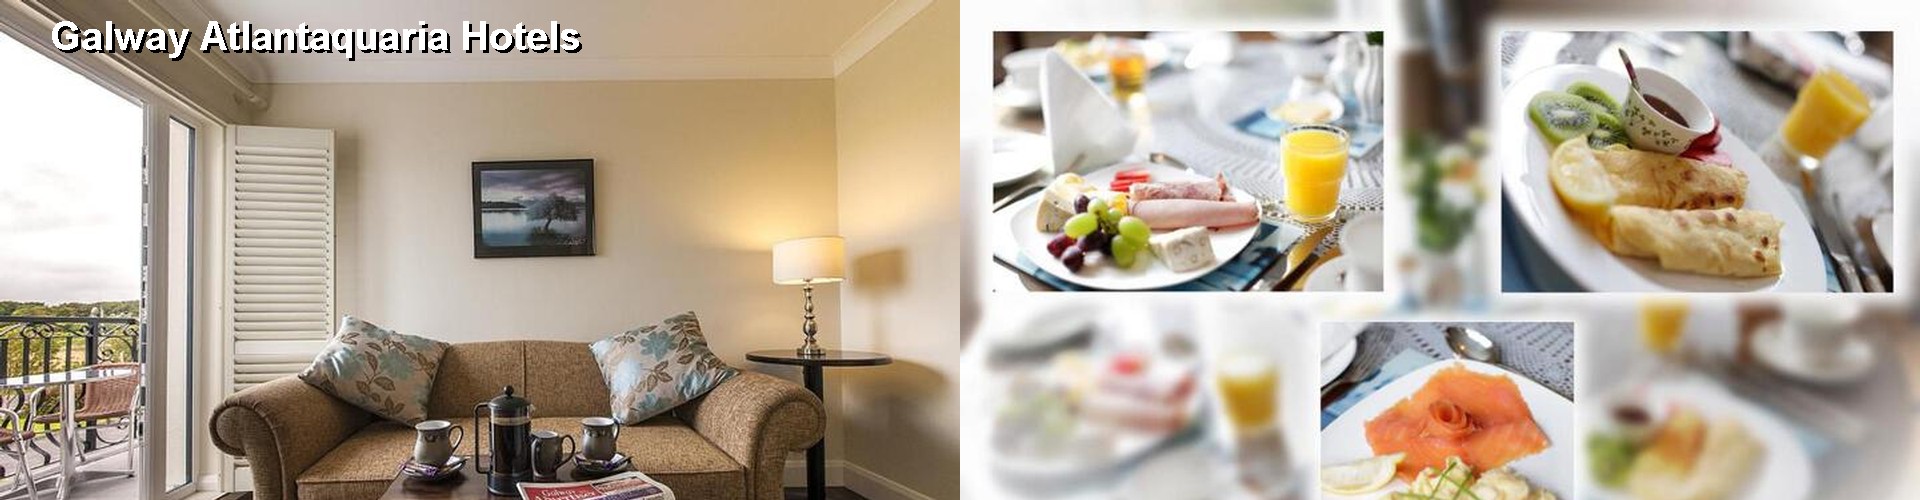 5 Best Hotels near Galway Atlantaquaria